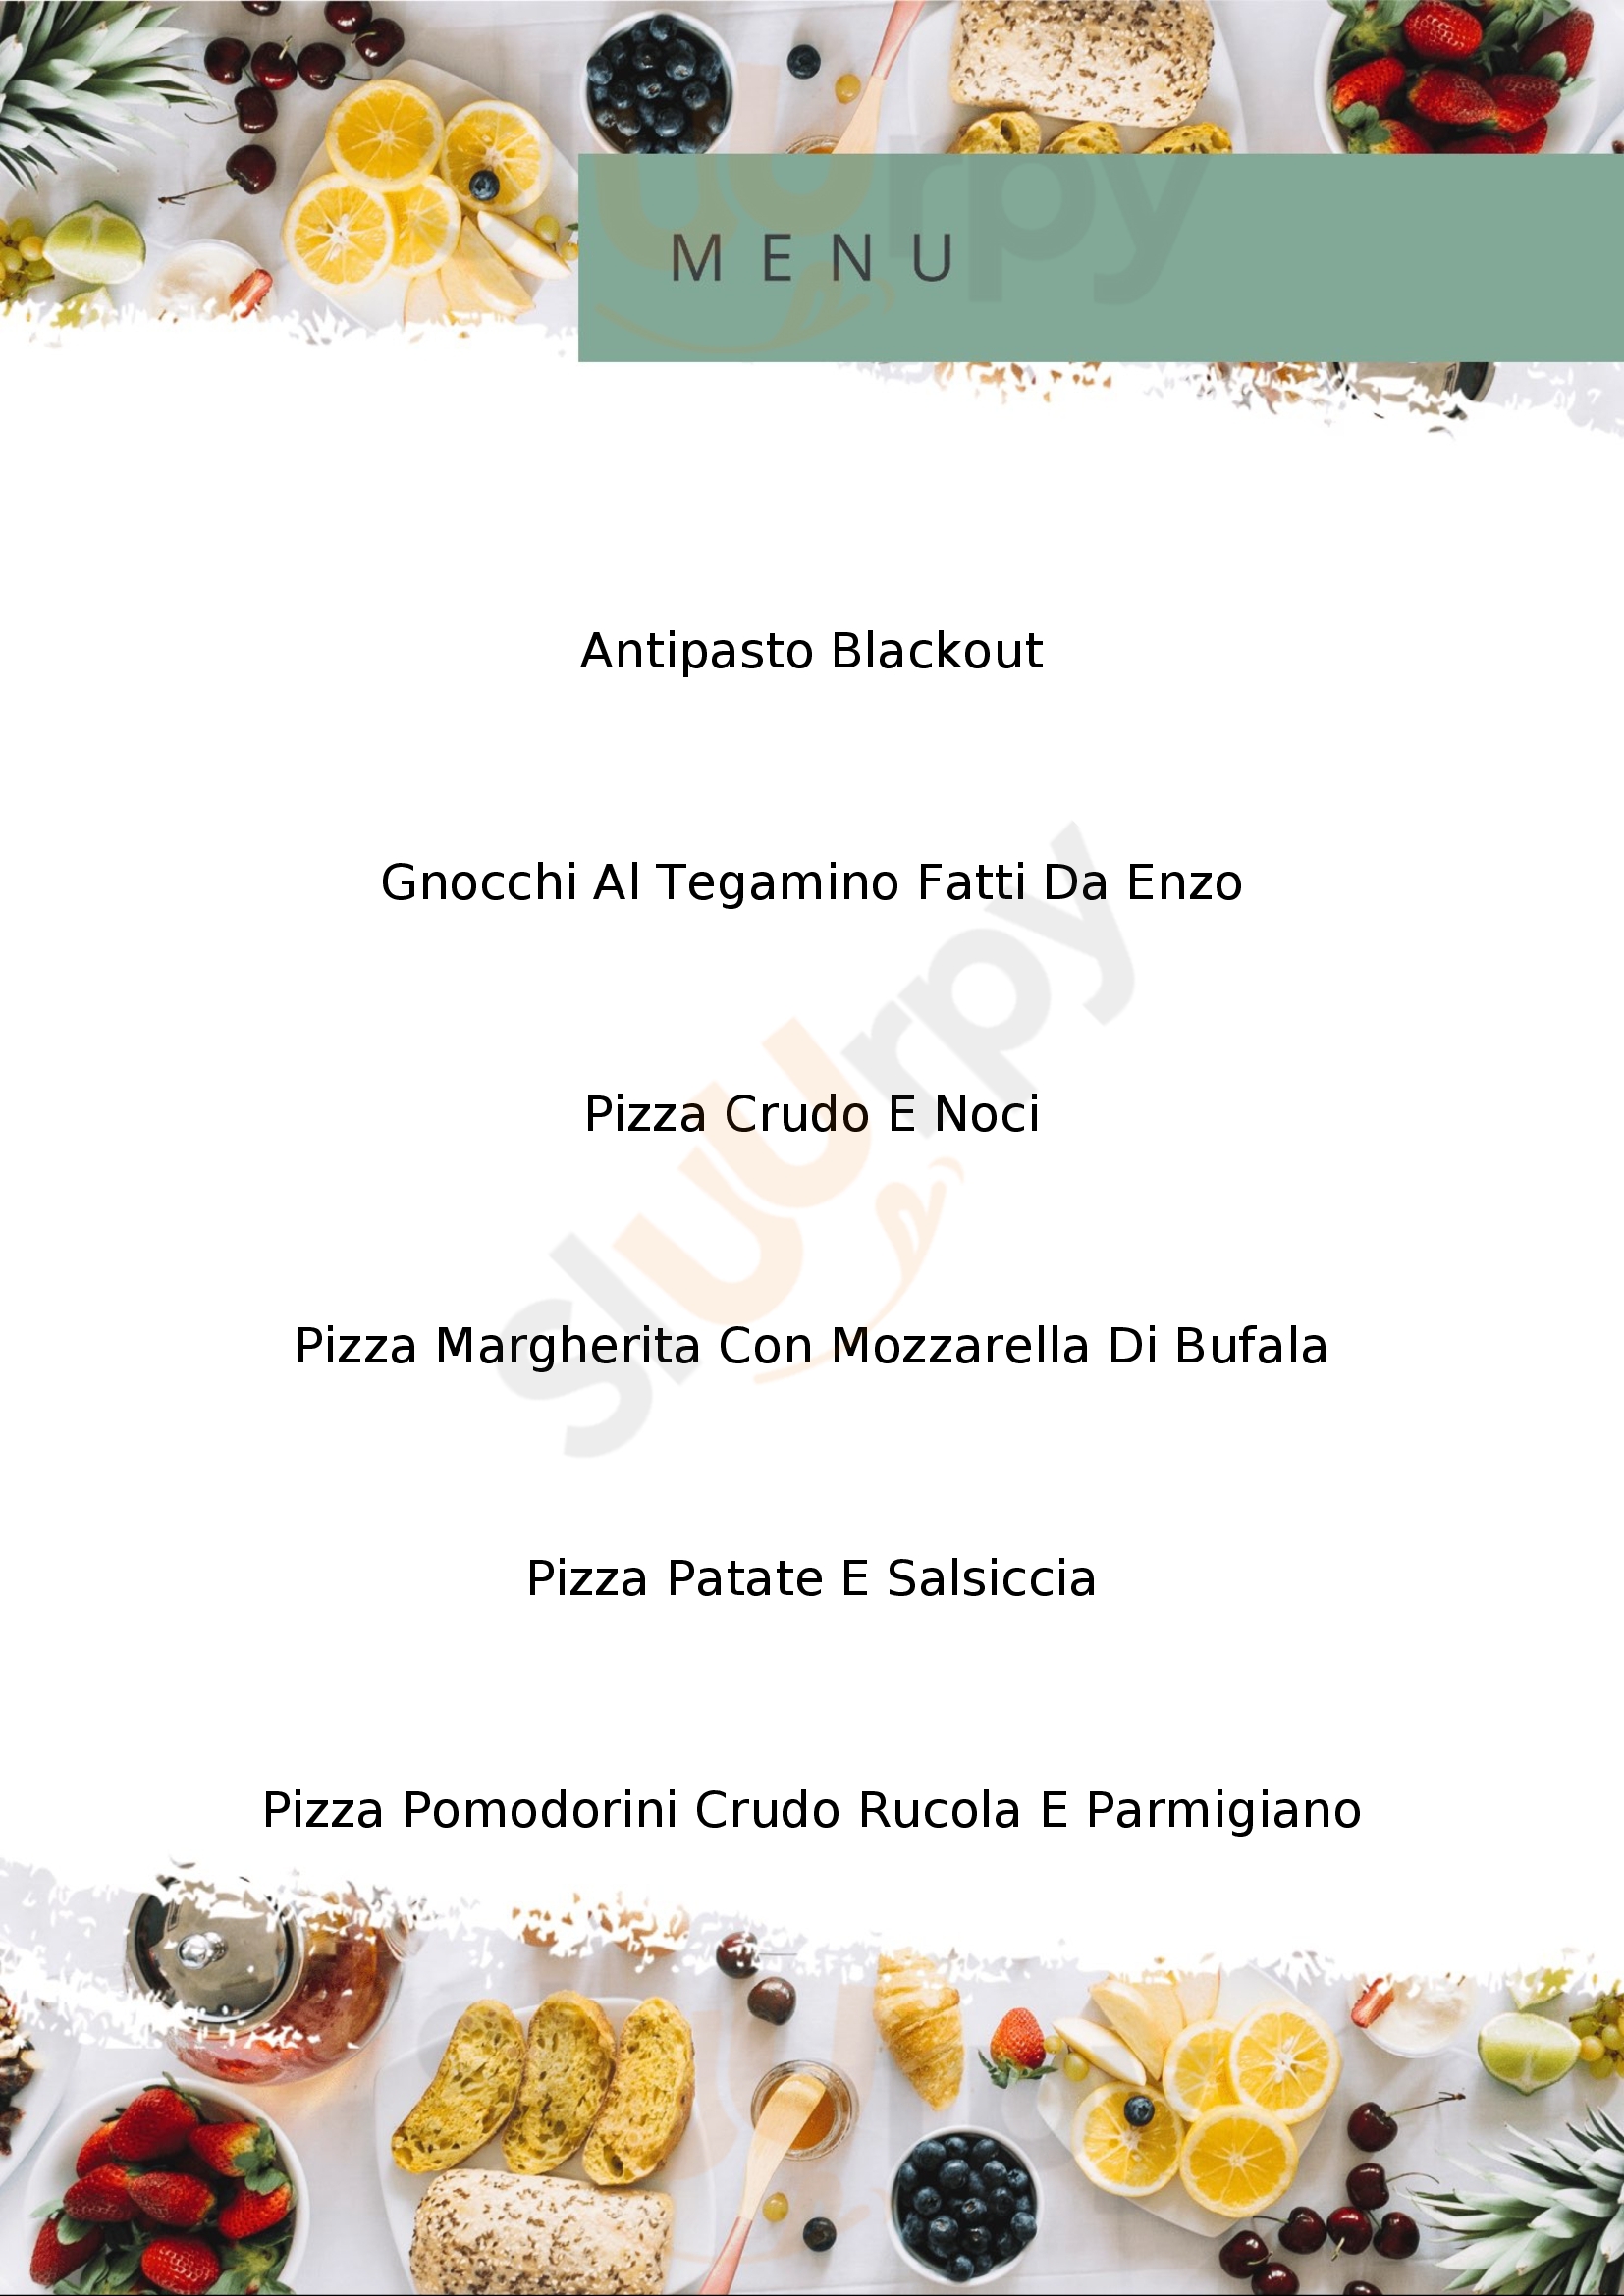 Ristopub Pizzeria Blackout Maddaloni menù 1 pagina